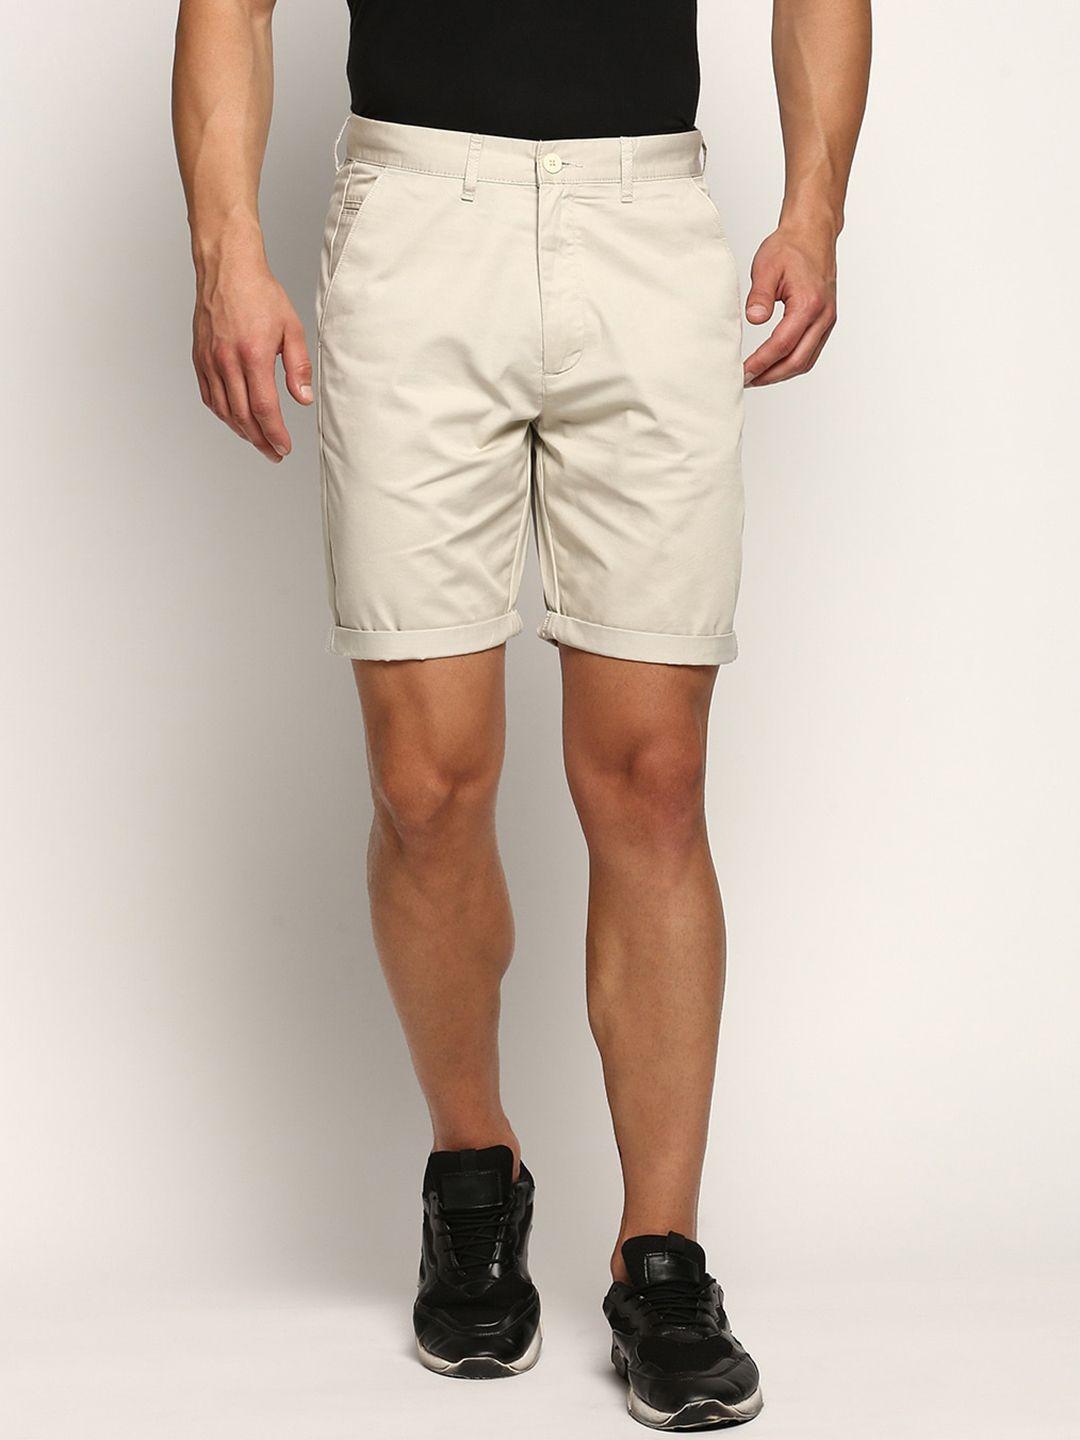 showoff men mid rise cotton chinos shorts